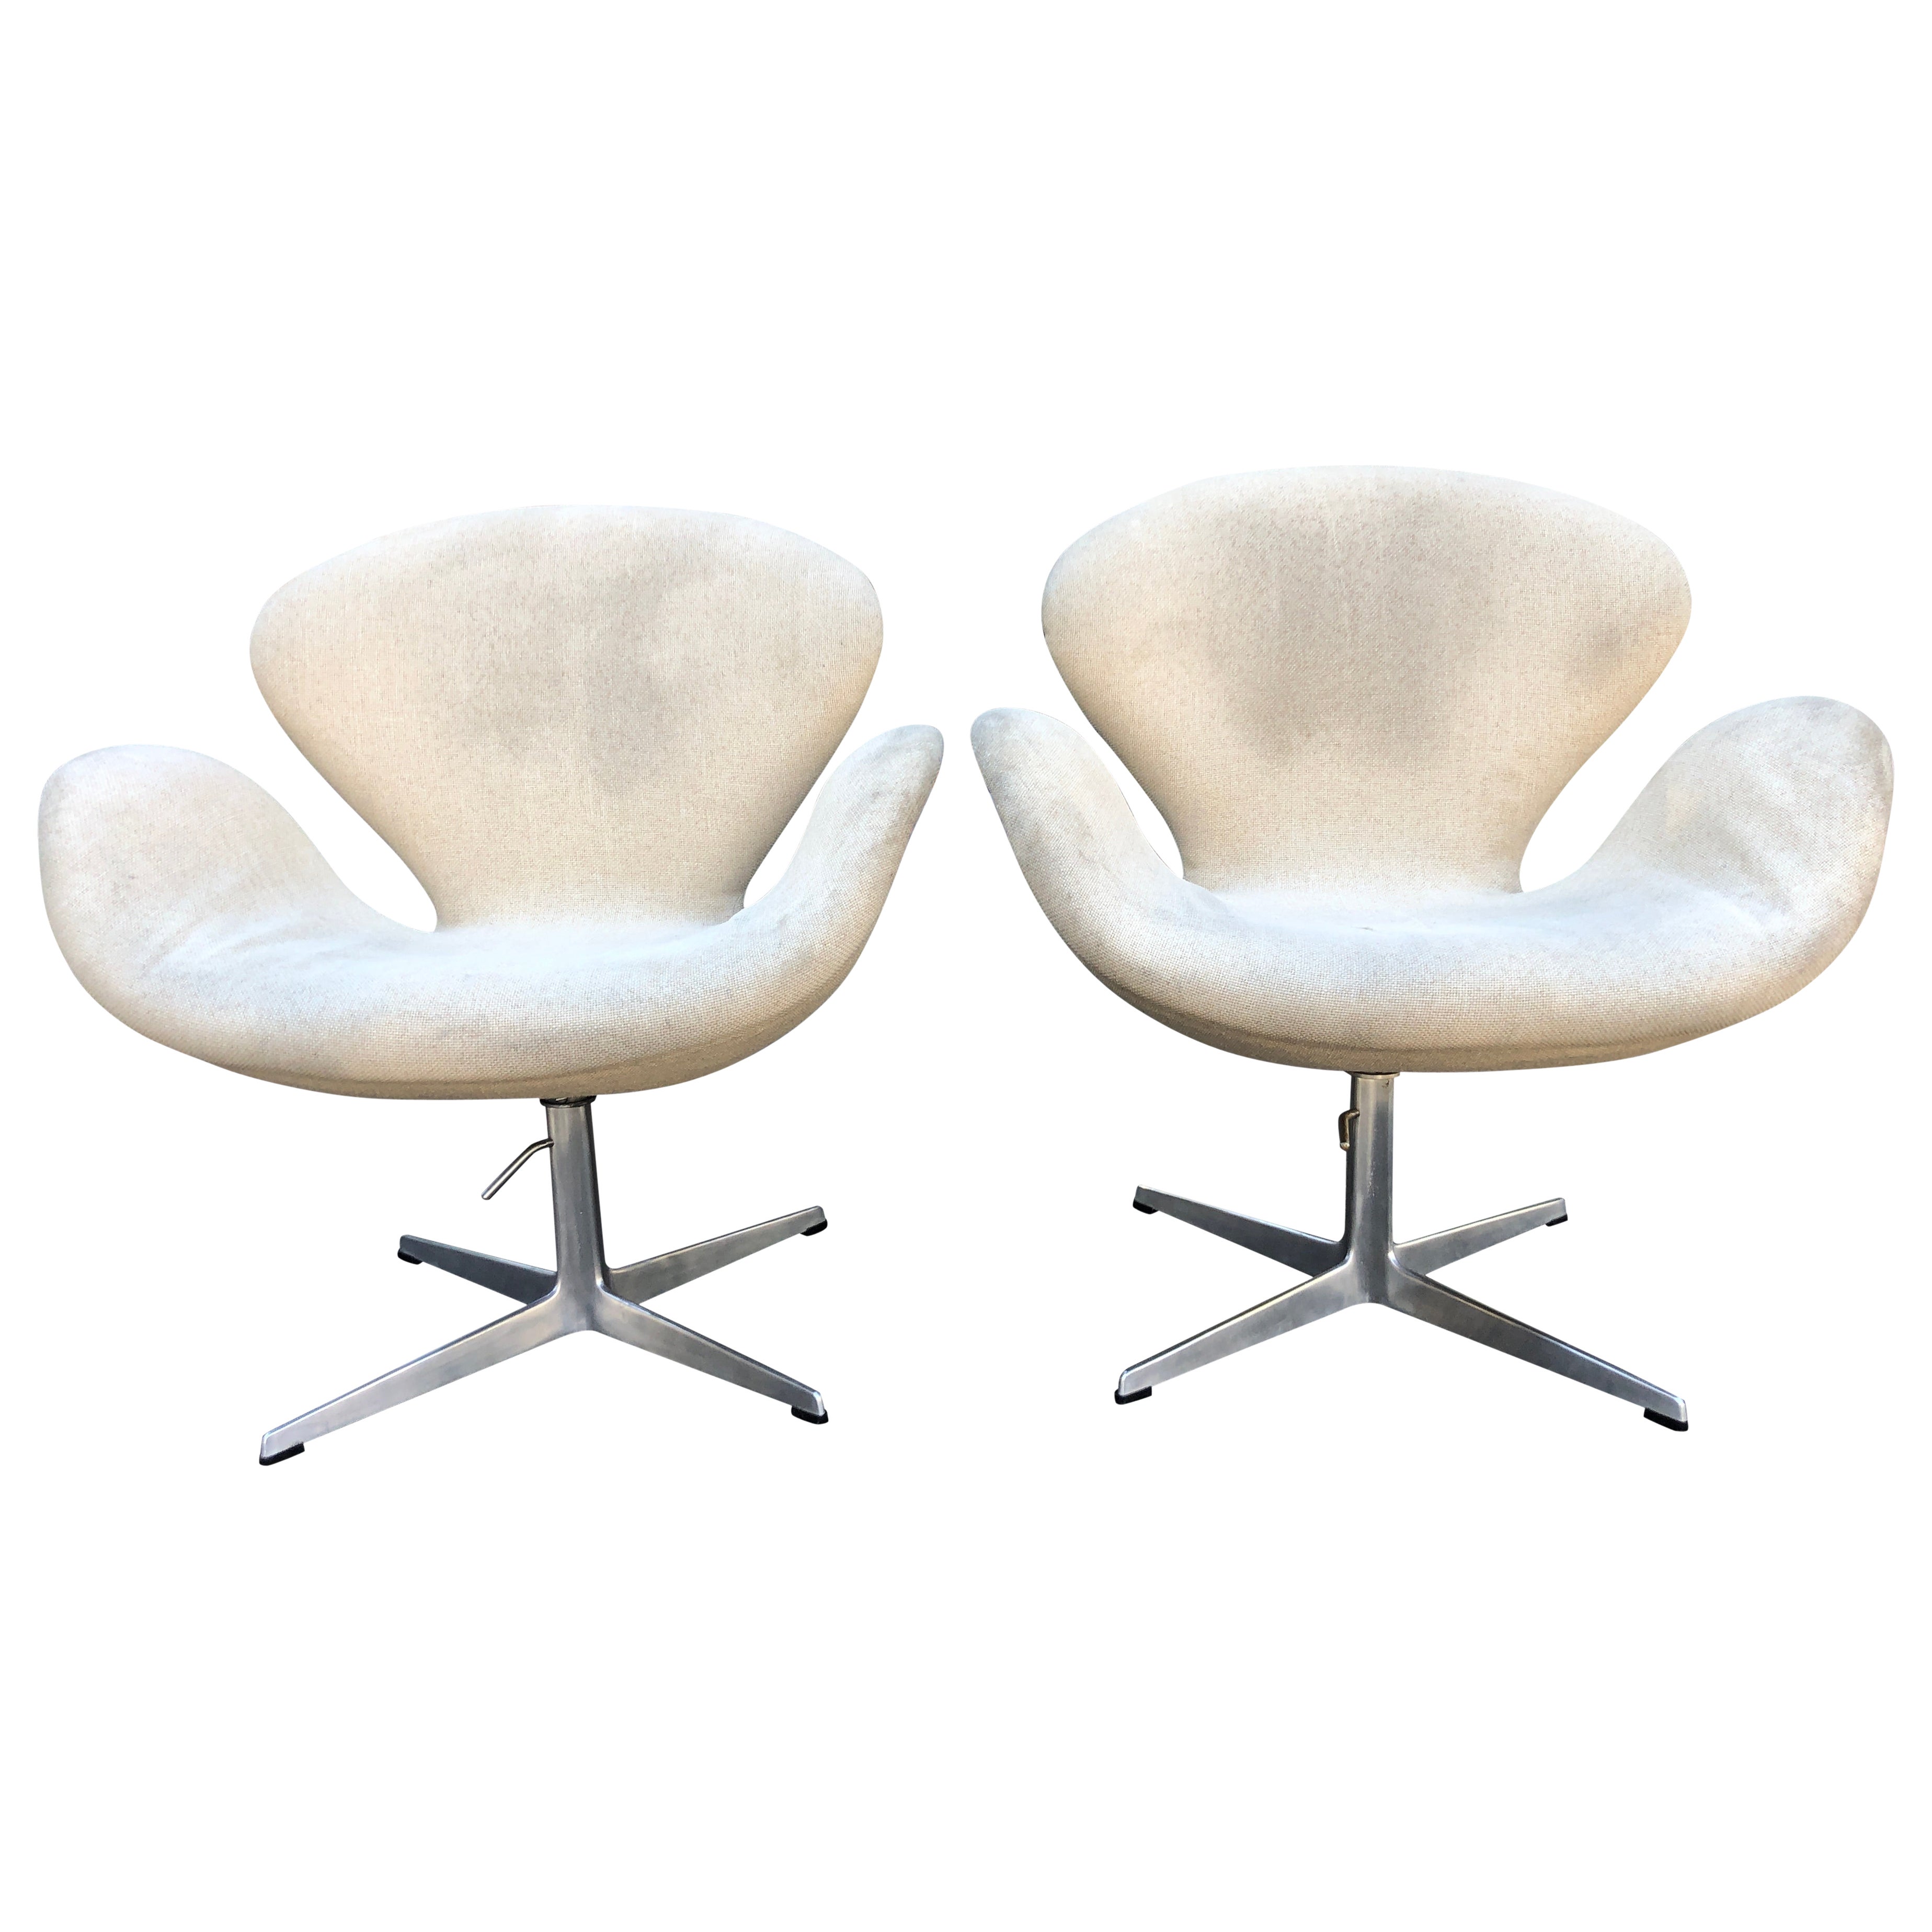 Lovely Pair Swan Chairs by Arne Jacobsen for Fritz Hansen, 1960s For Sale